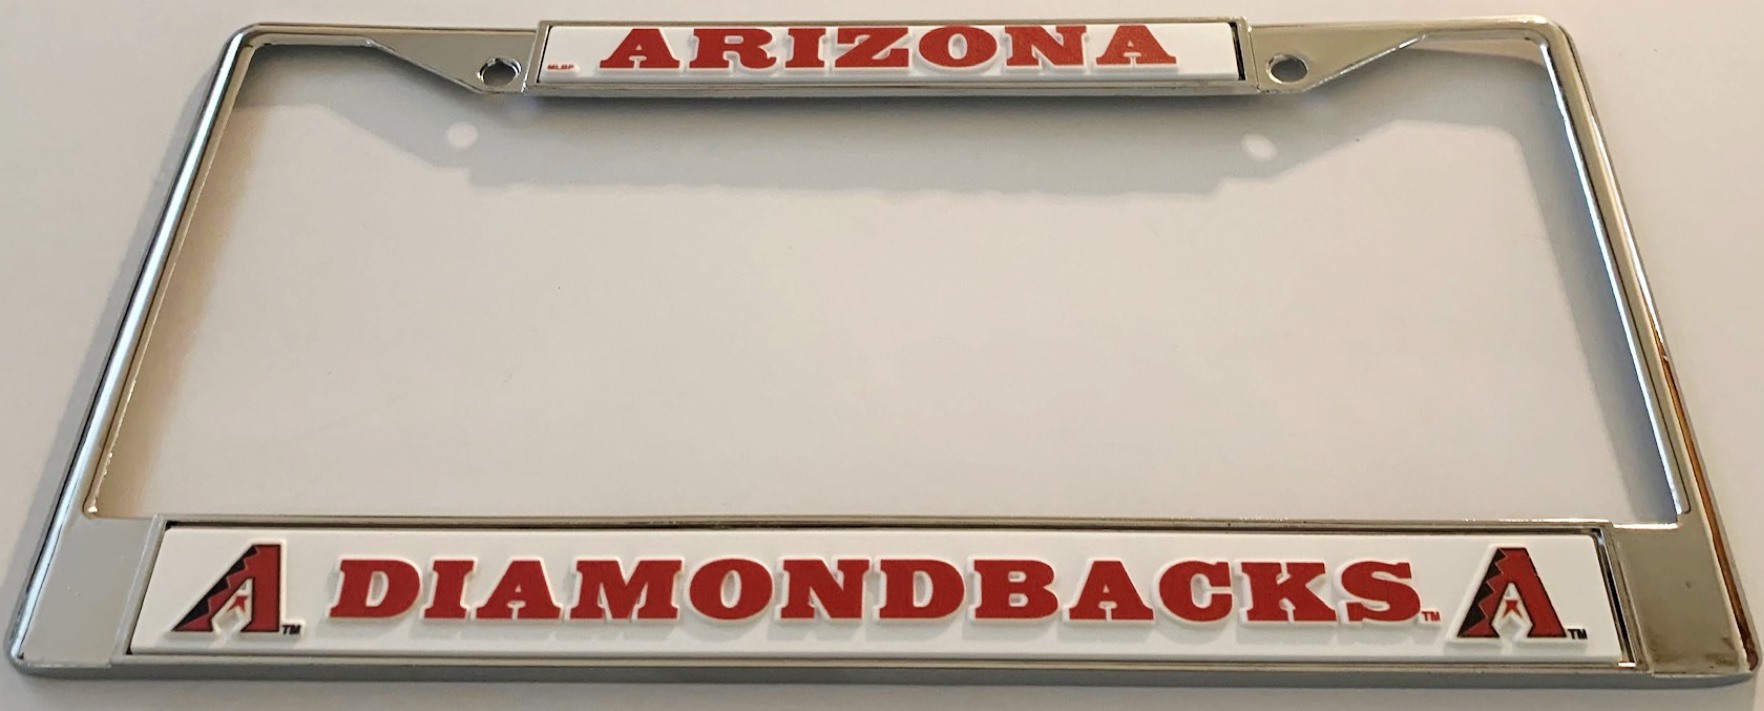 1 Arizona Diamondbacks Chrome Automobile License Plate Frame